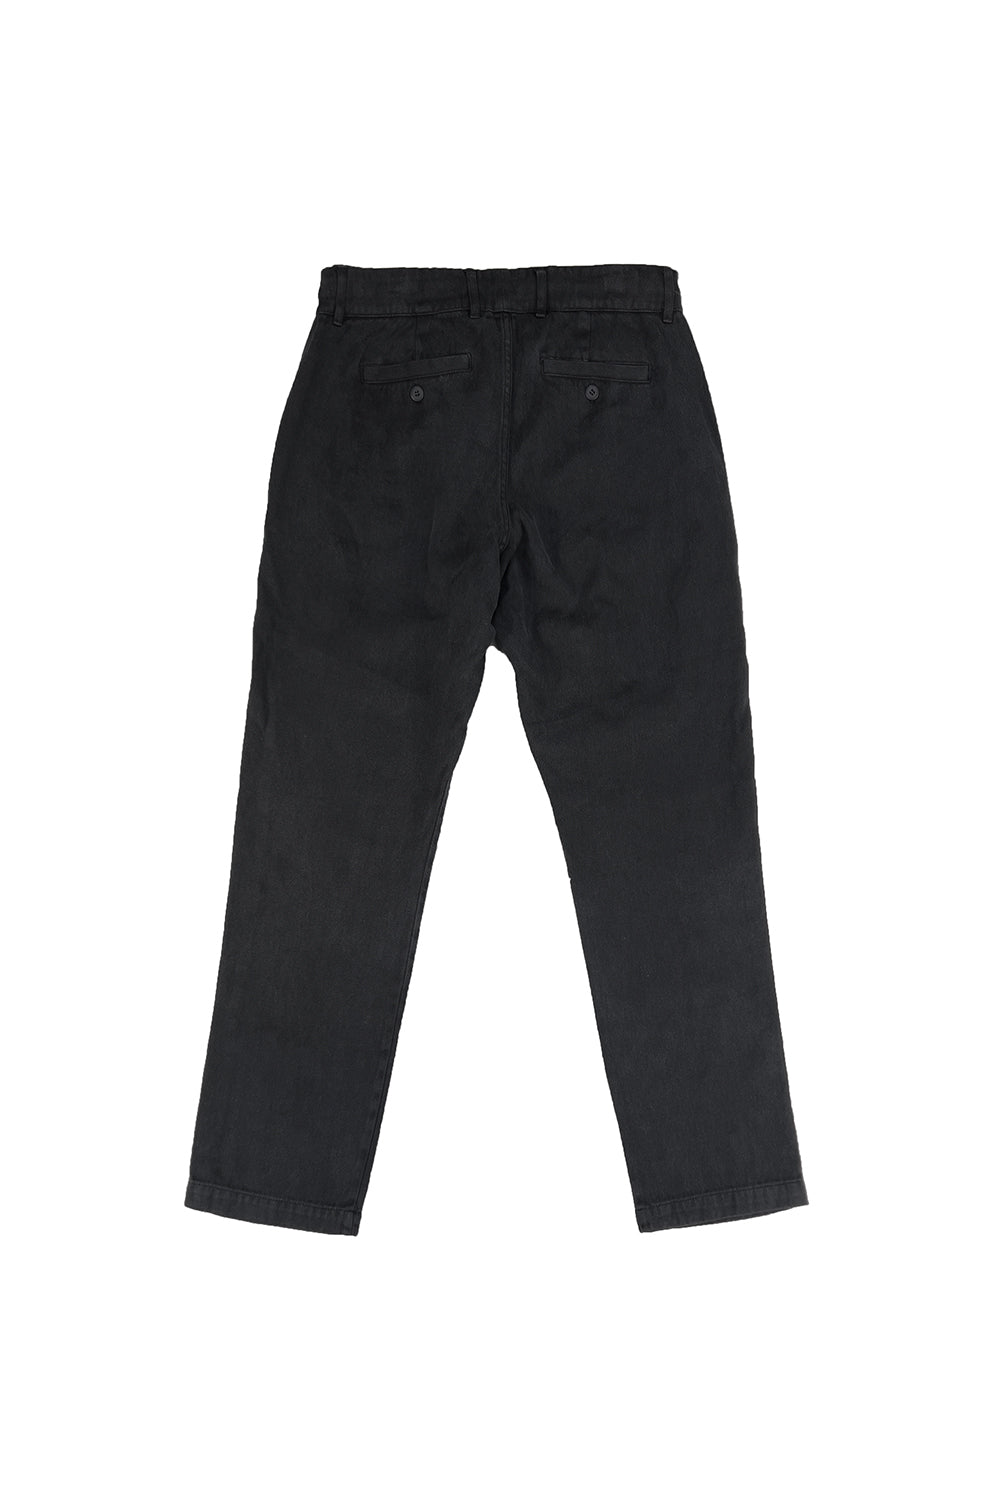 Pacific Coast Pant | Jungmaven Hemp Clothing & Accessories / Color:Pacific Coast Pant | Jungmaven Hemp Clothing & Accessories / model_desc: Back in Black